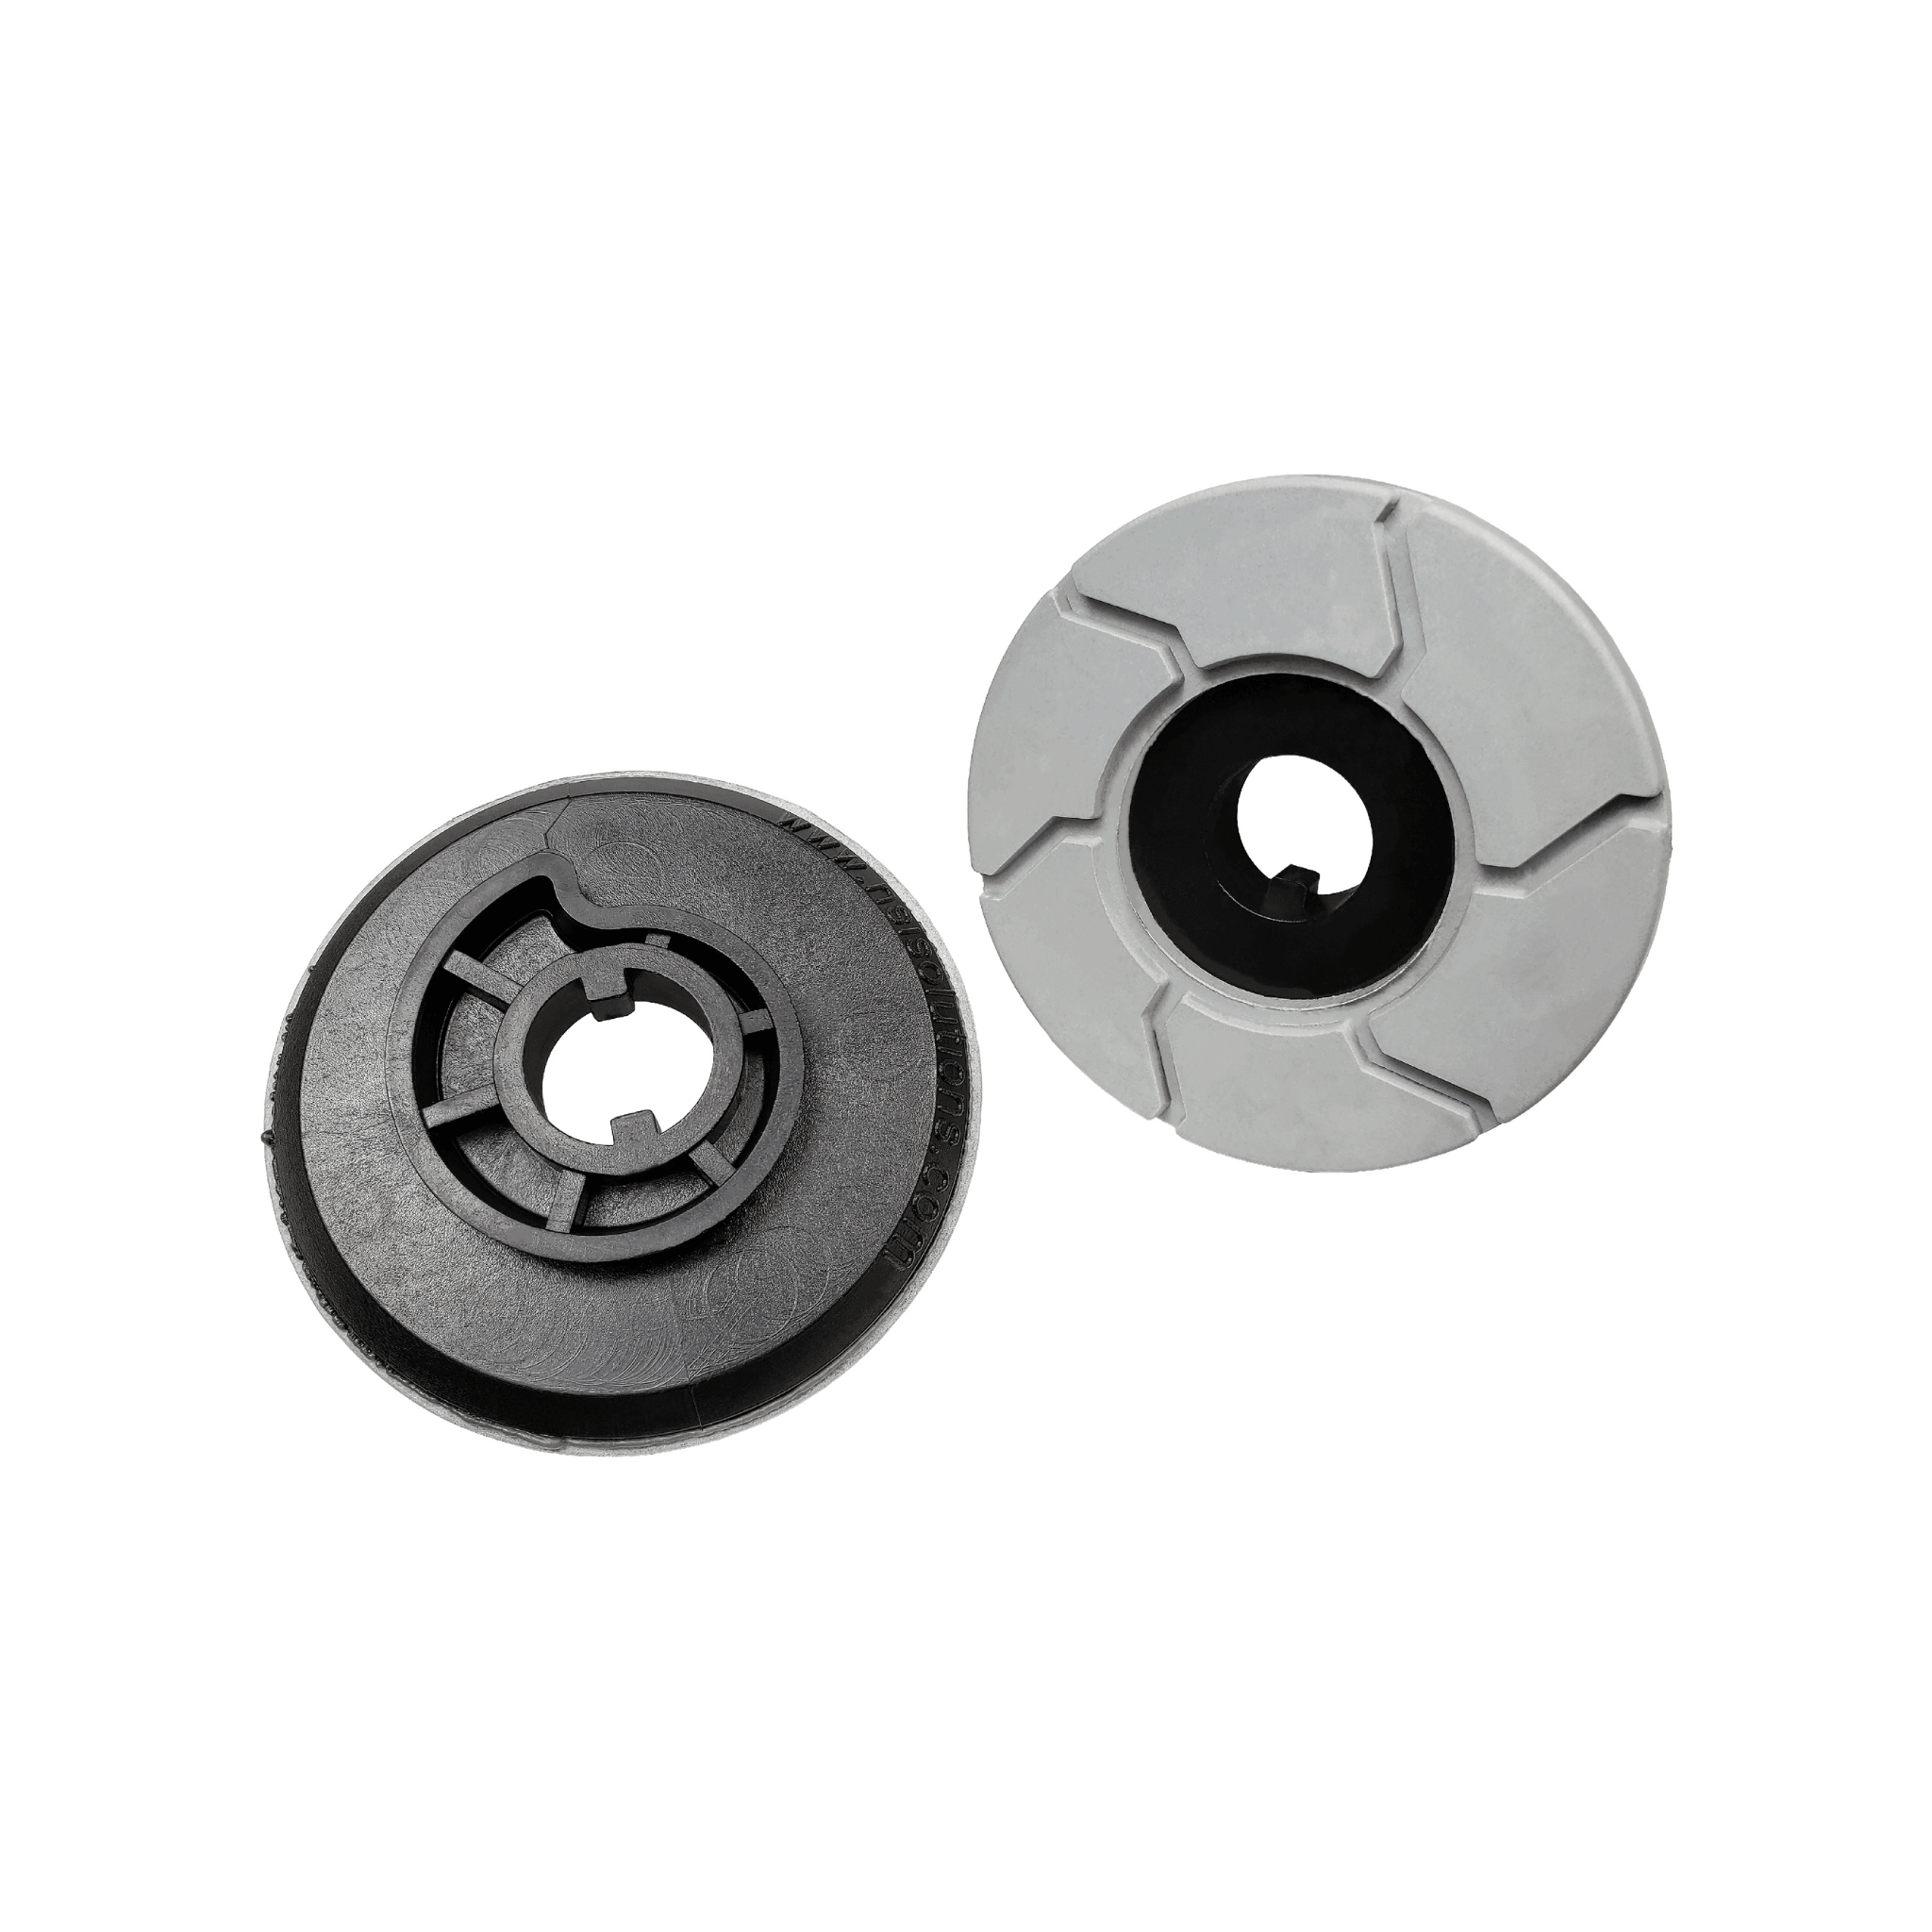 SL3® 3 Inch Rigid Turbo Abrasive, 60 Grit - Direct Stone Tool Supply, Inc